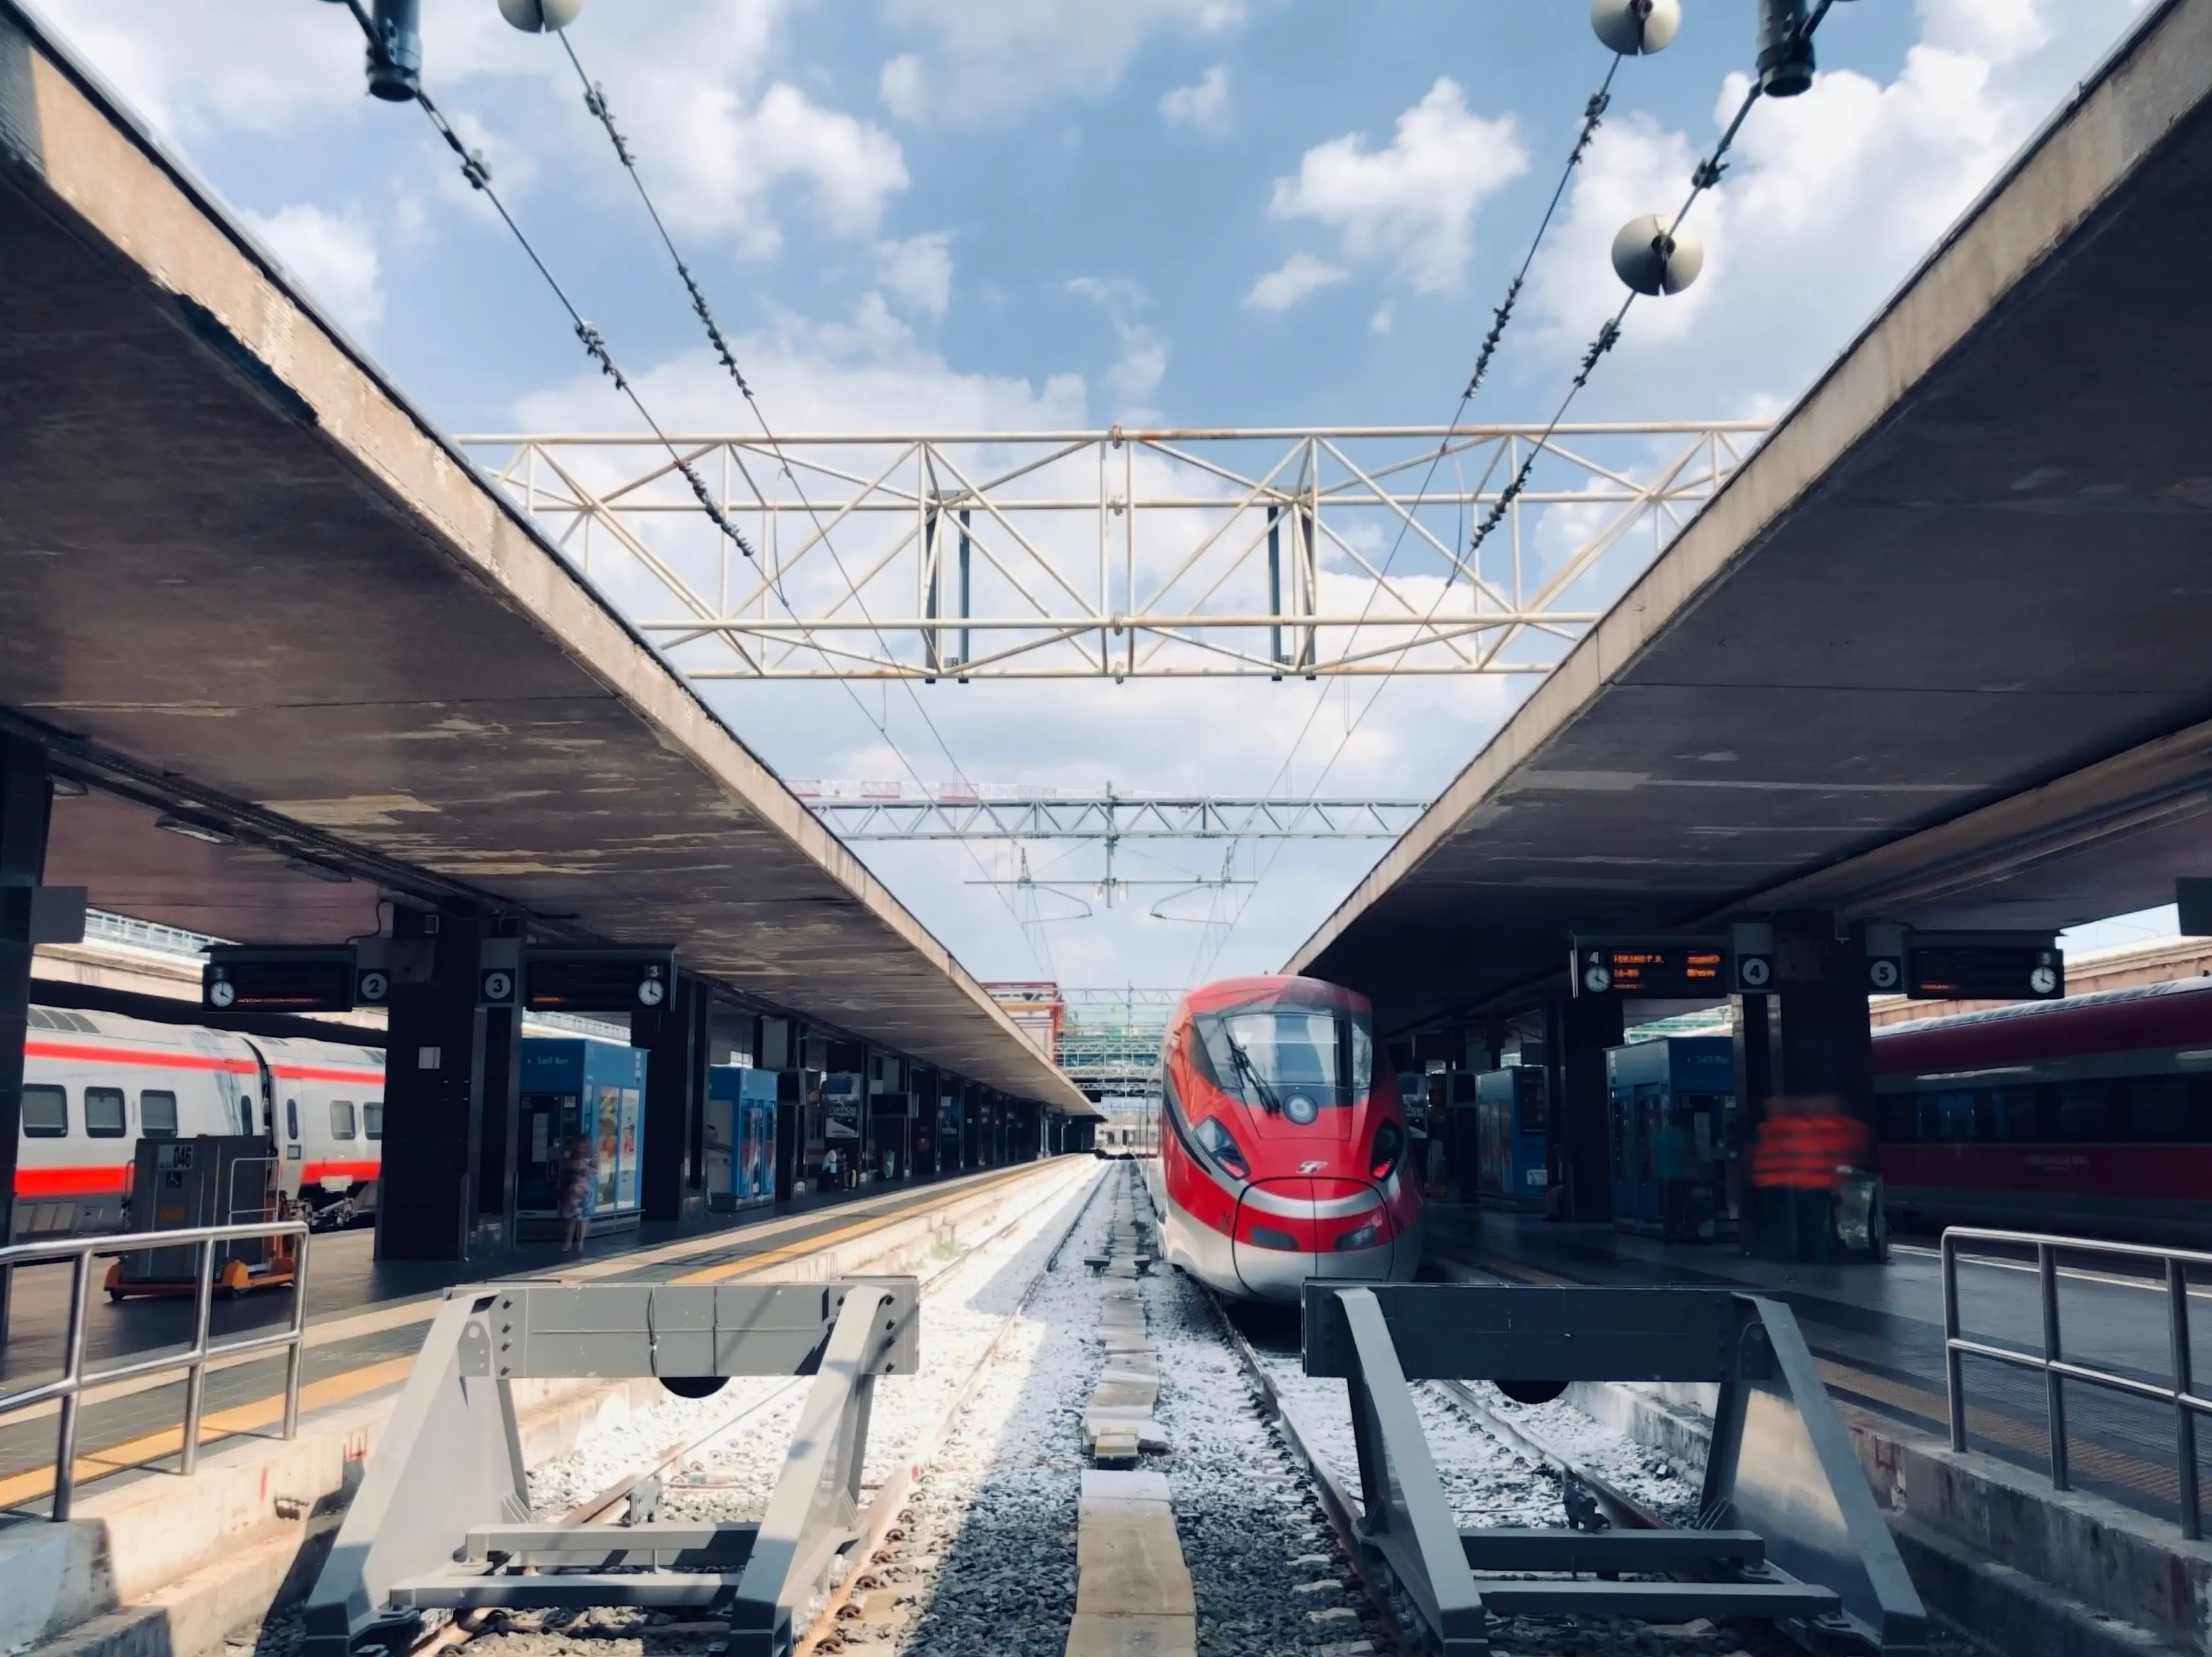 Leonardo Express train from Fiumicino to Rome city center